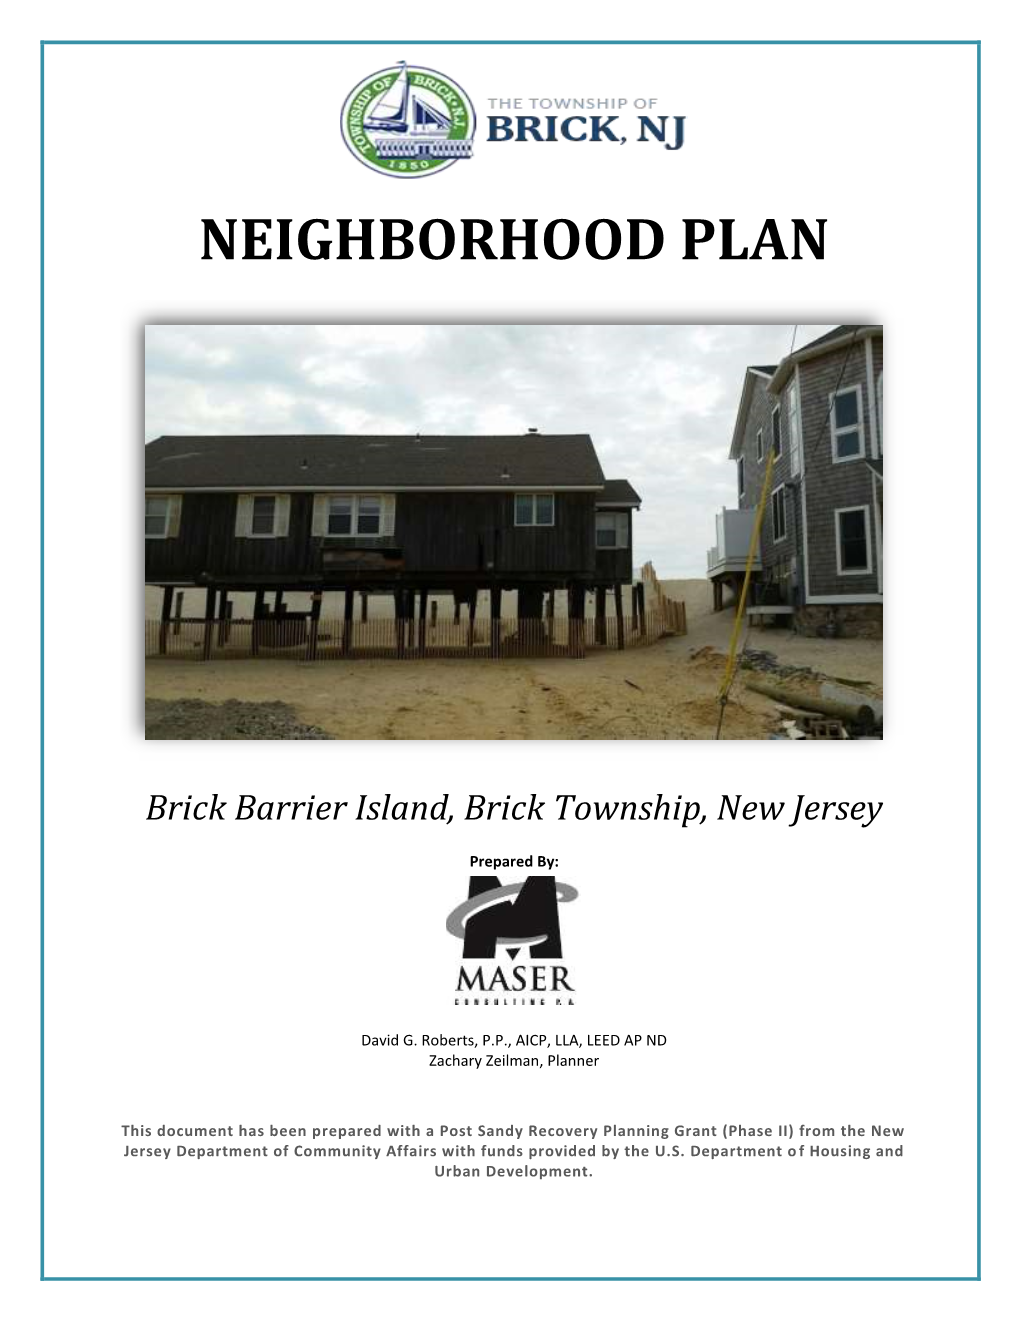 Barrier Island, Brick Township, New Jersey